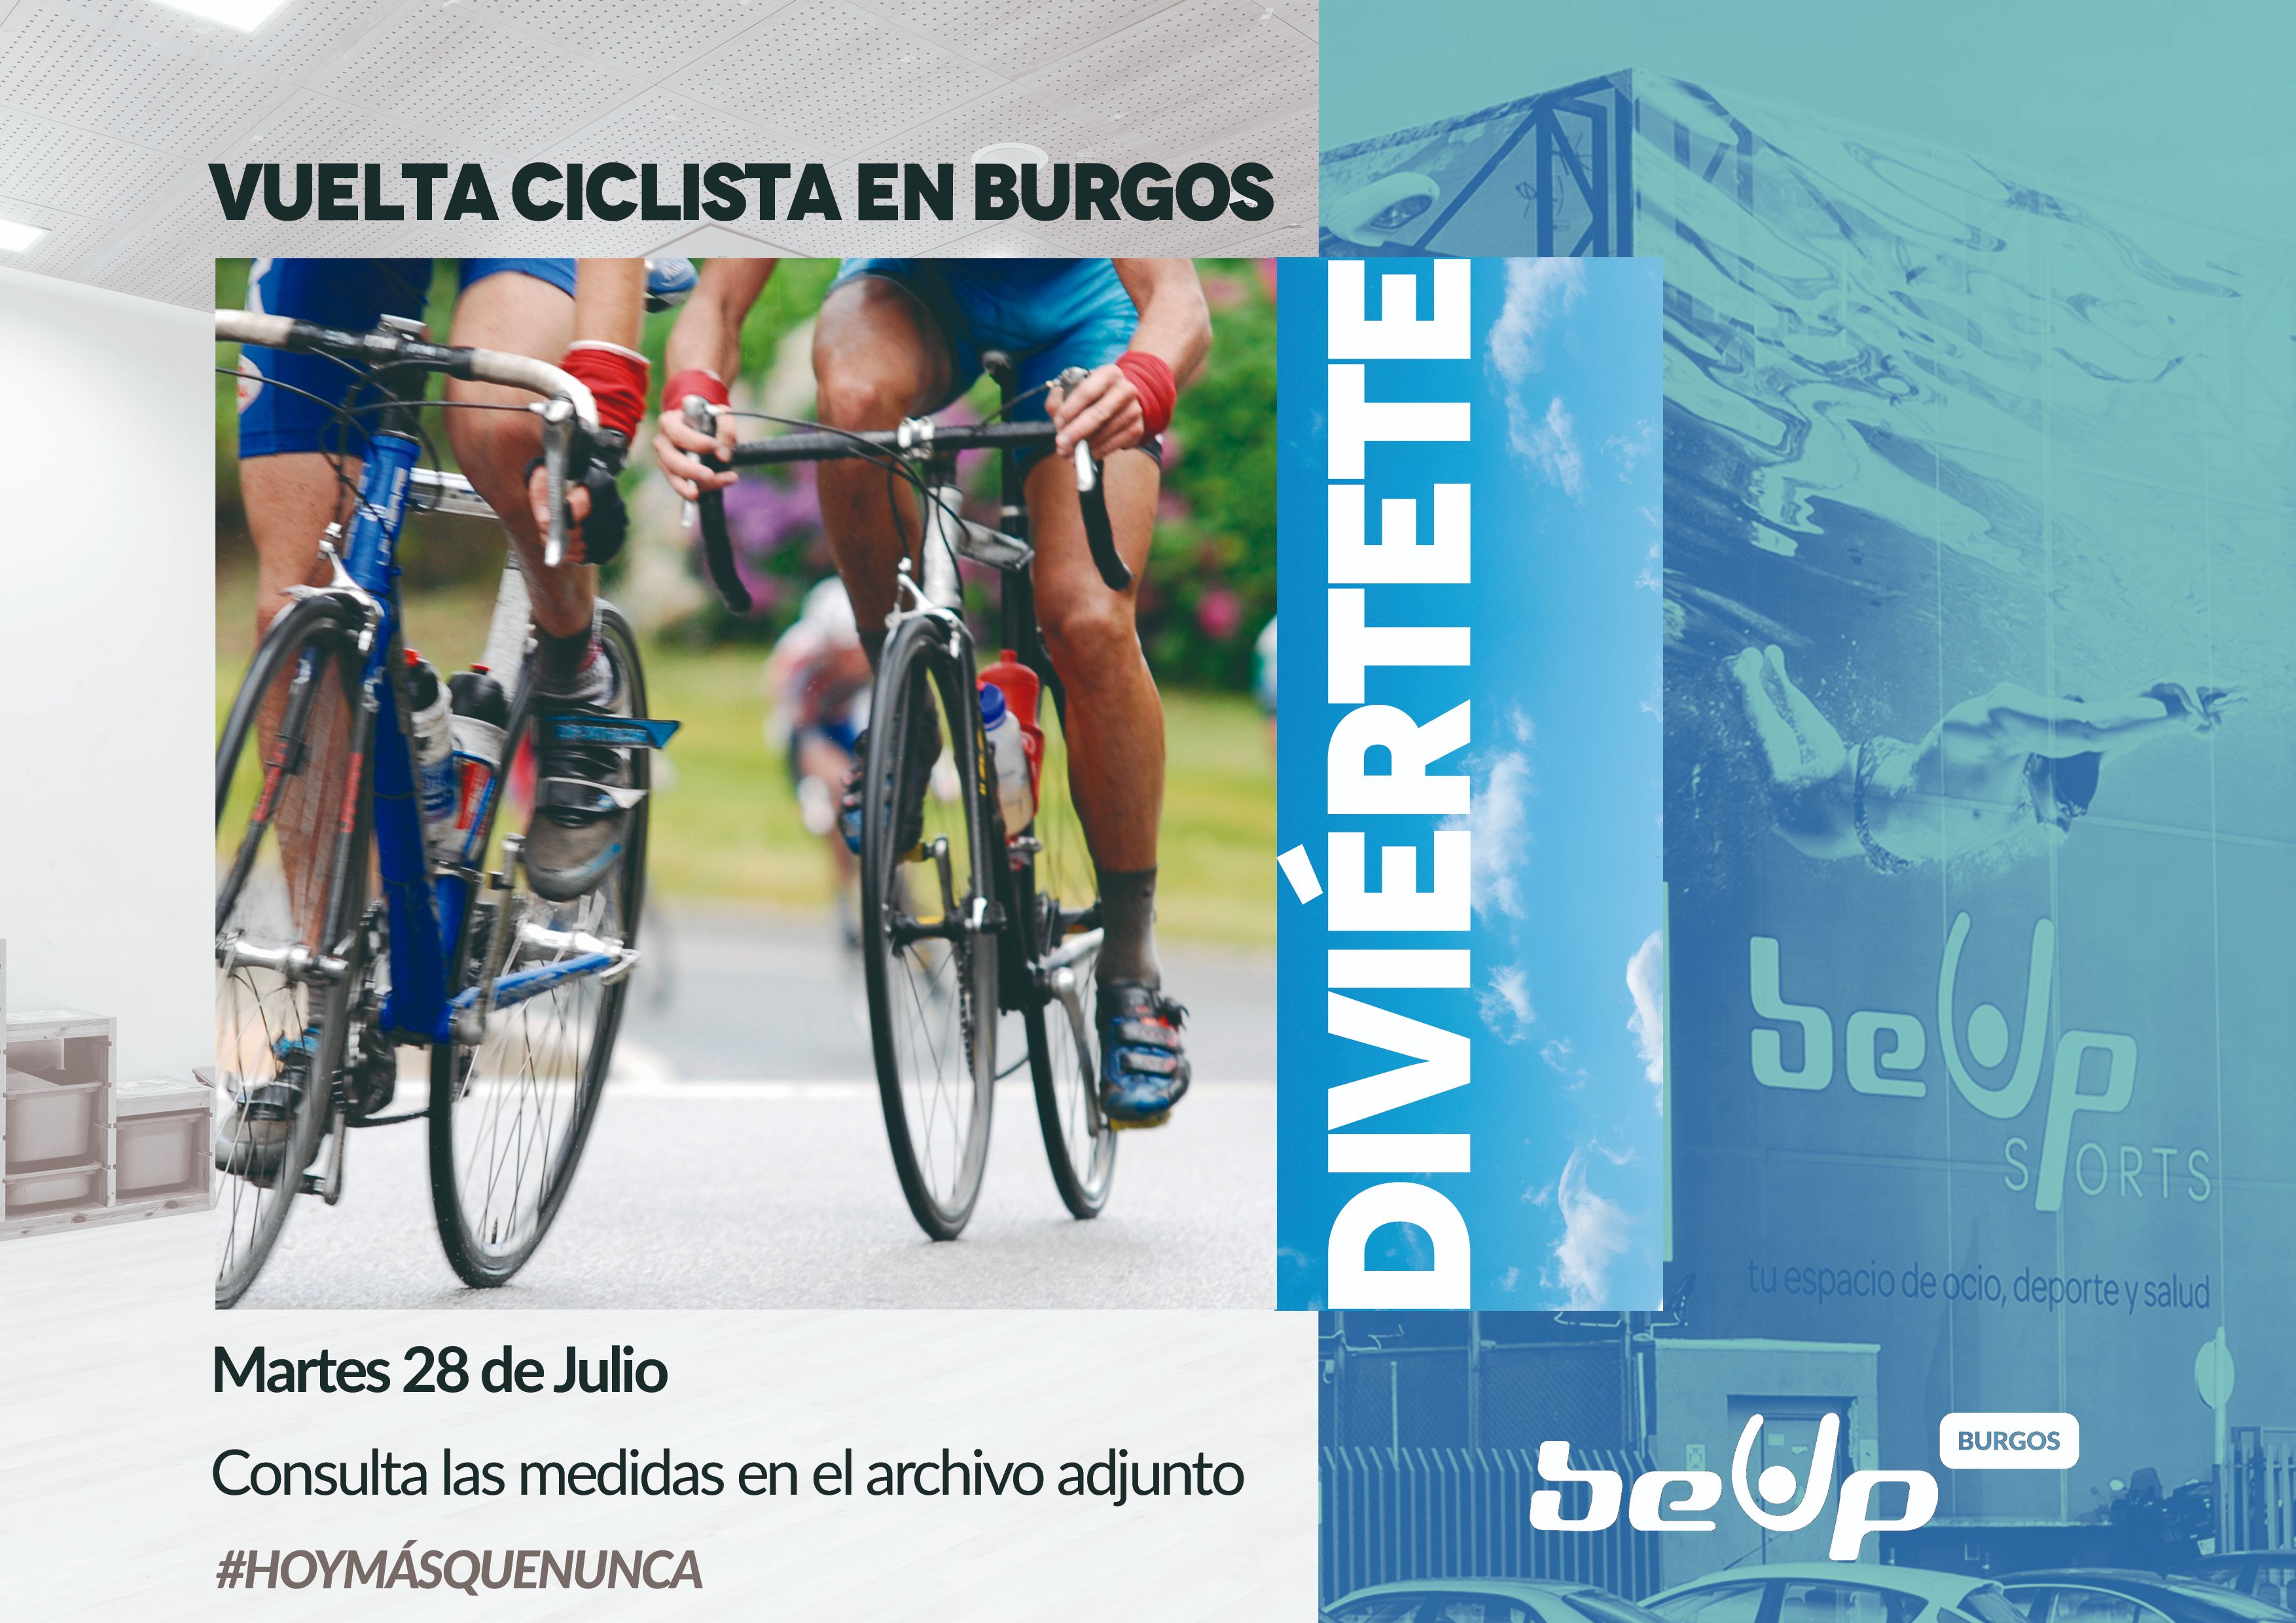 Vuelta Ciclista en Burgos